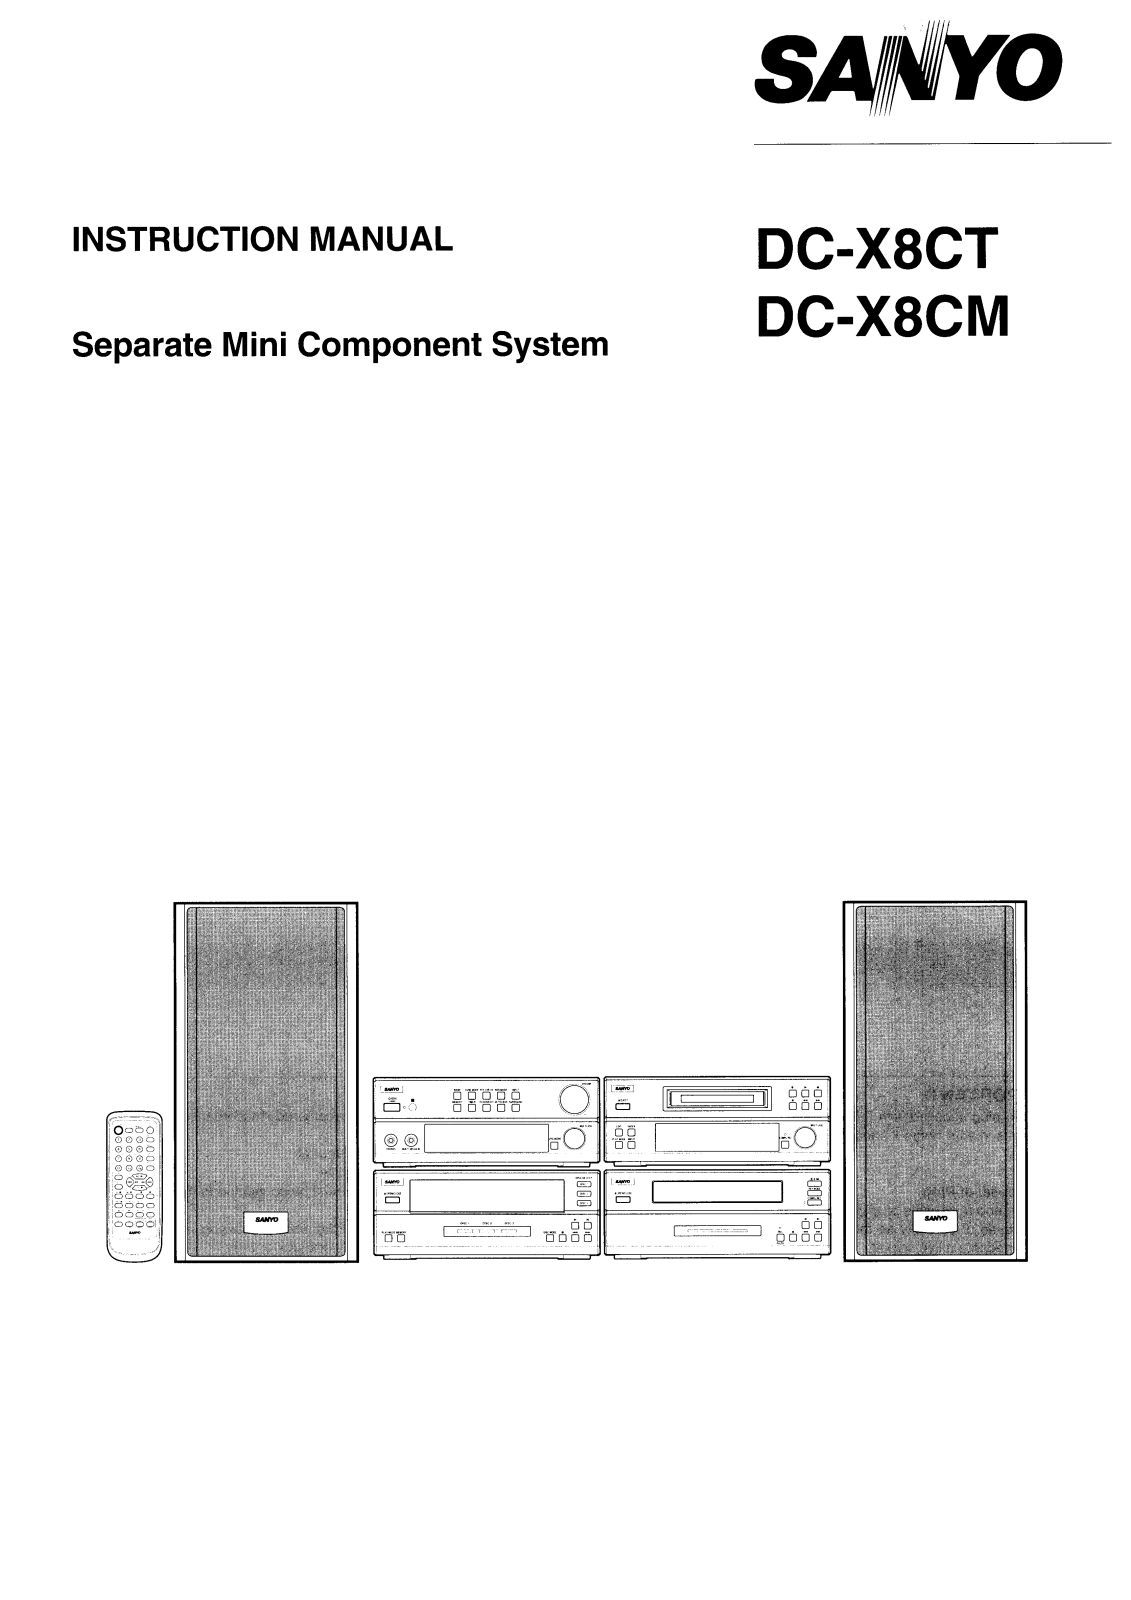 Sanyo DC-X8CM, DC-X8CT Instruction Manual